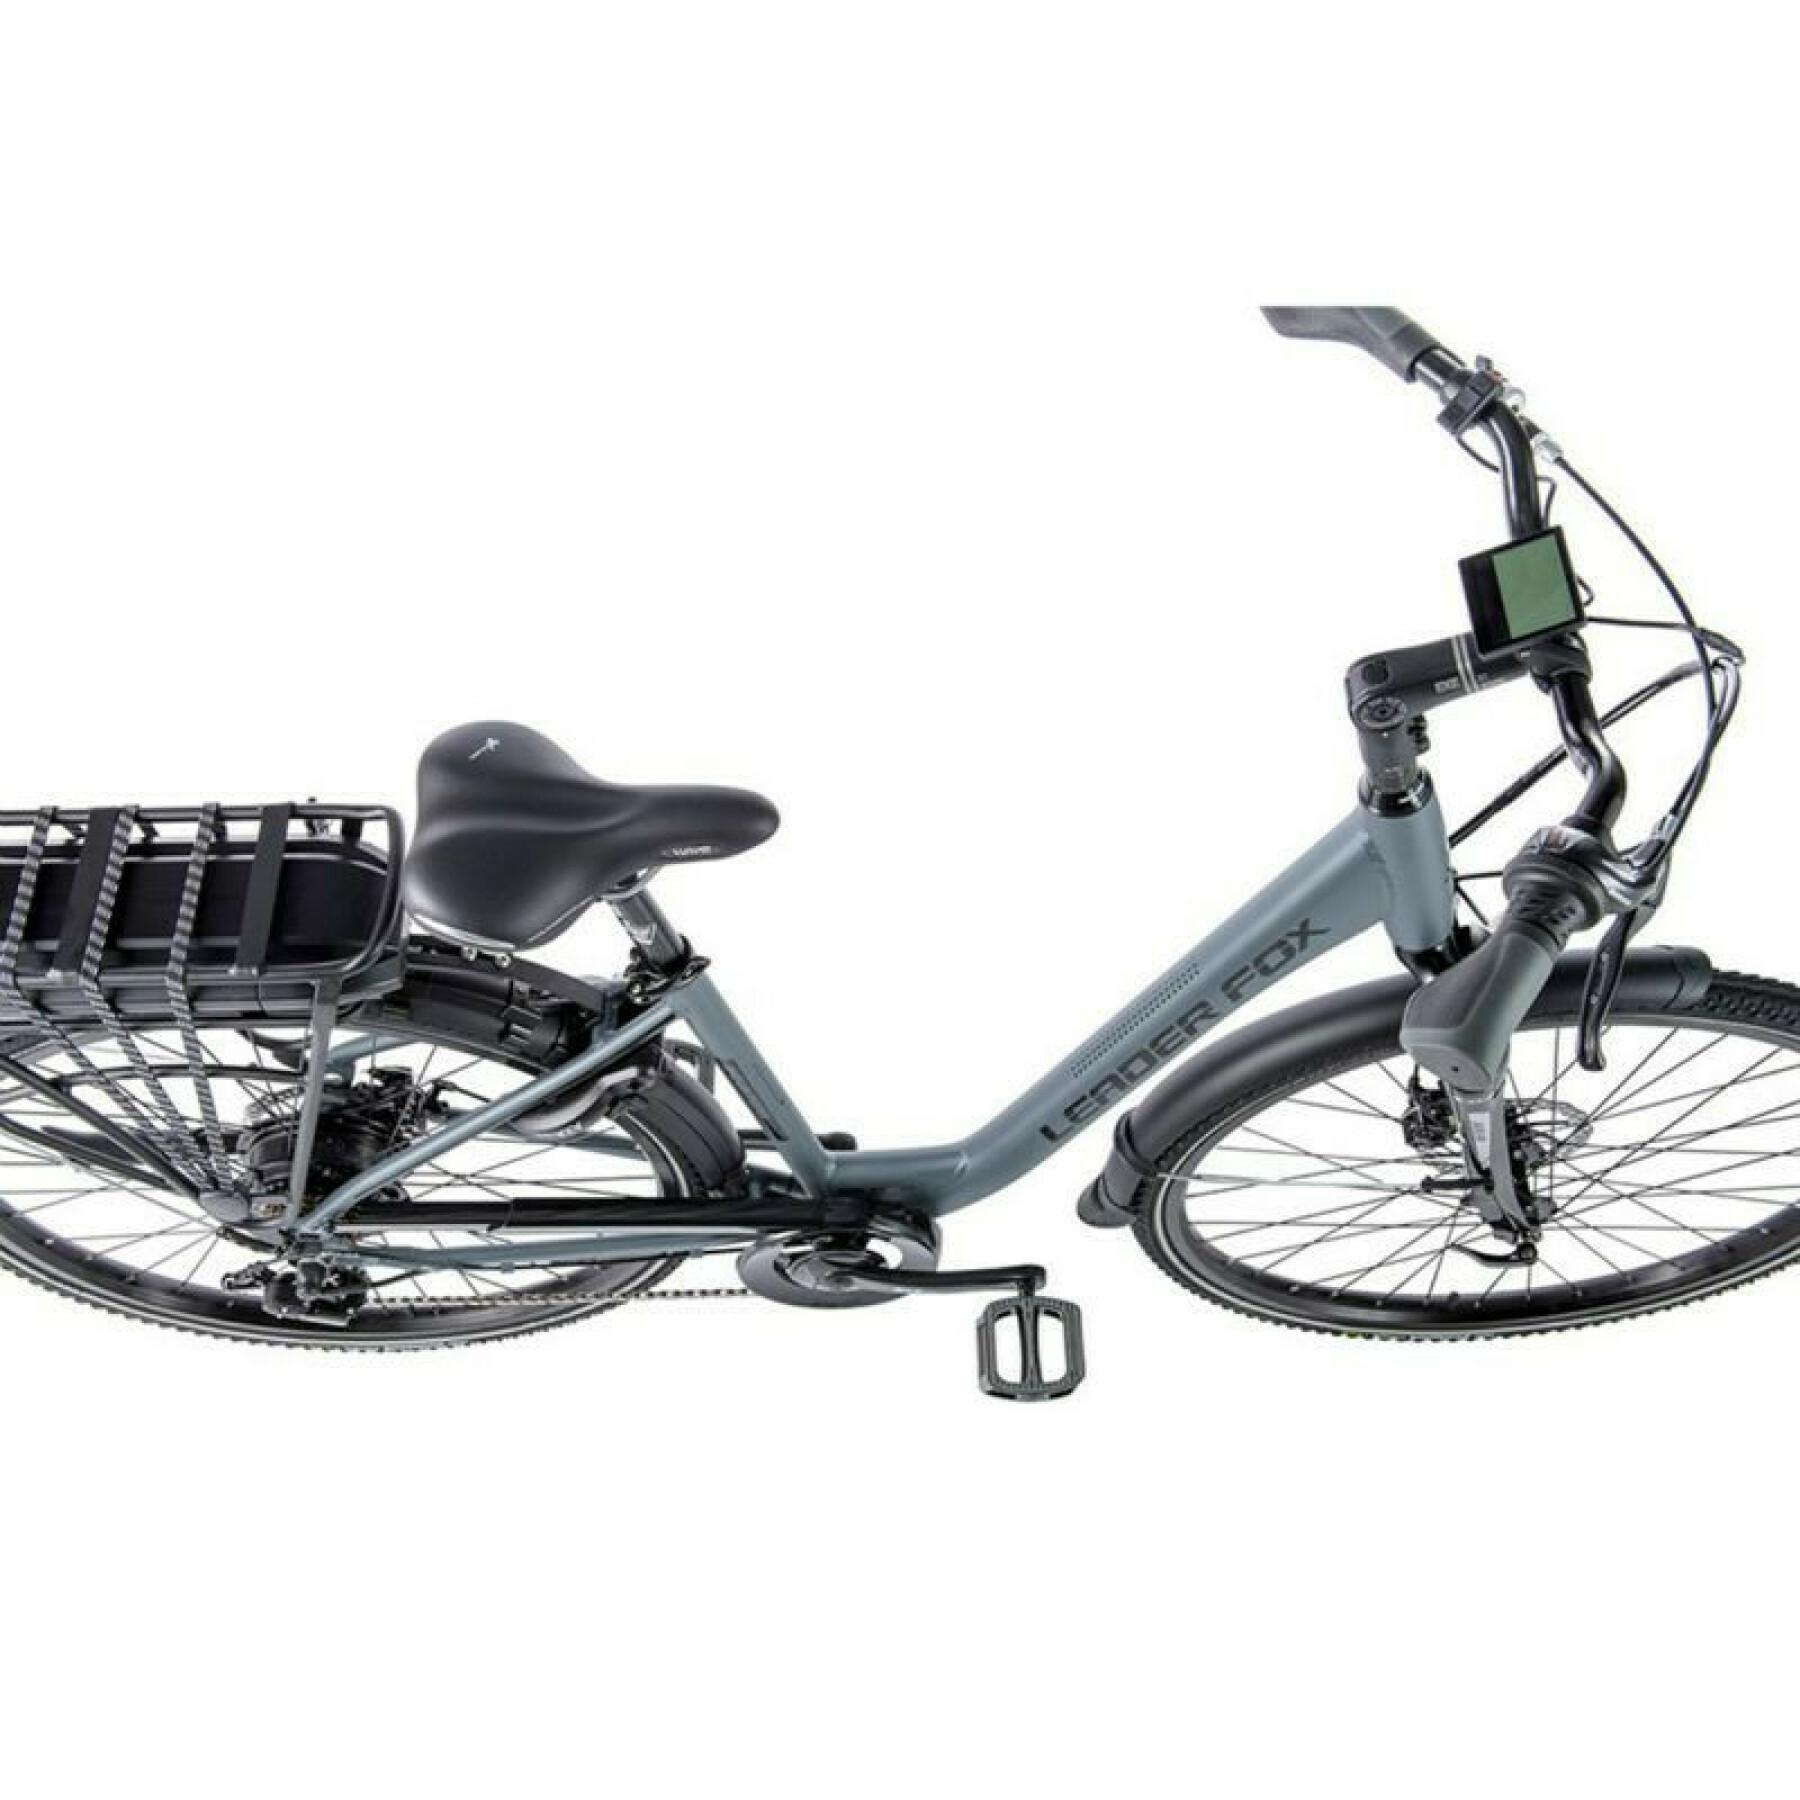 Bicicletta elettrica Leader Fox Induktora 2020/2021